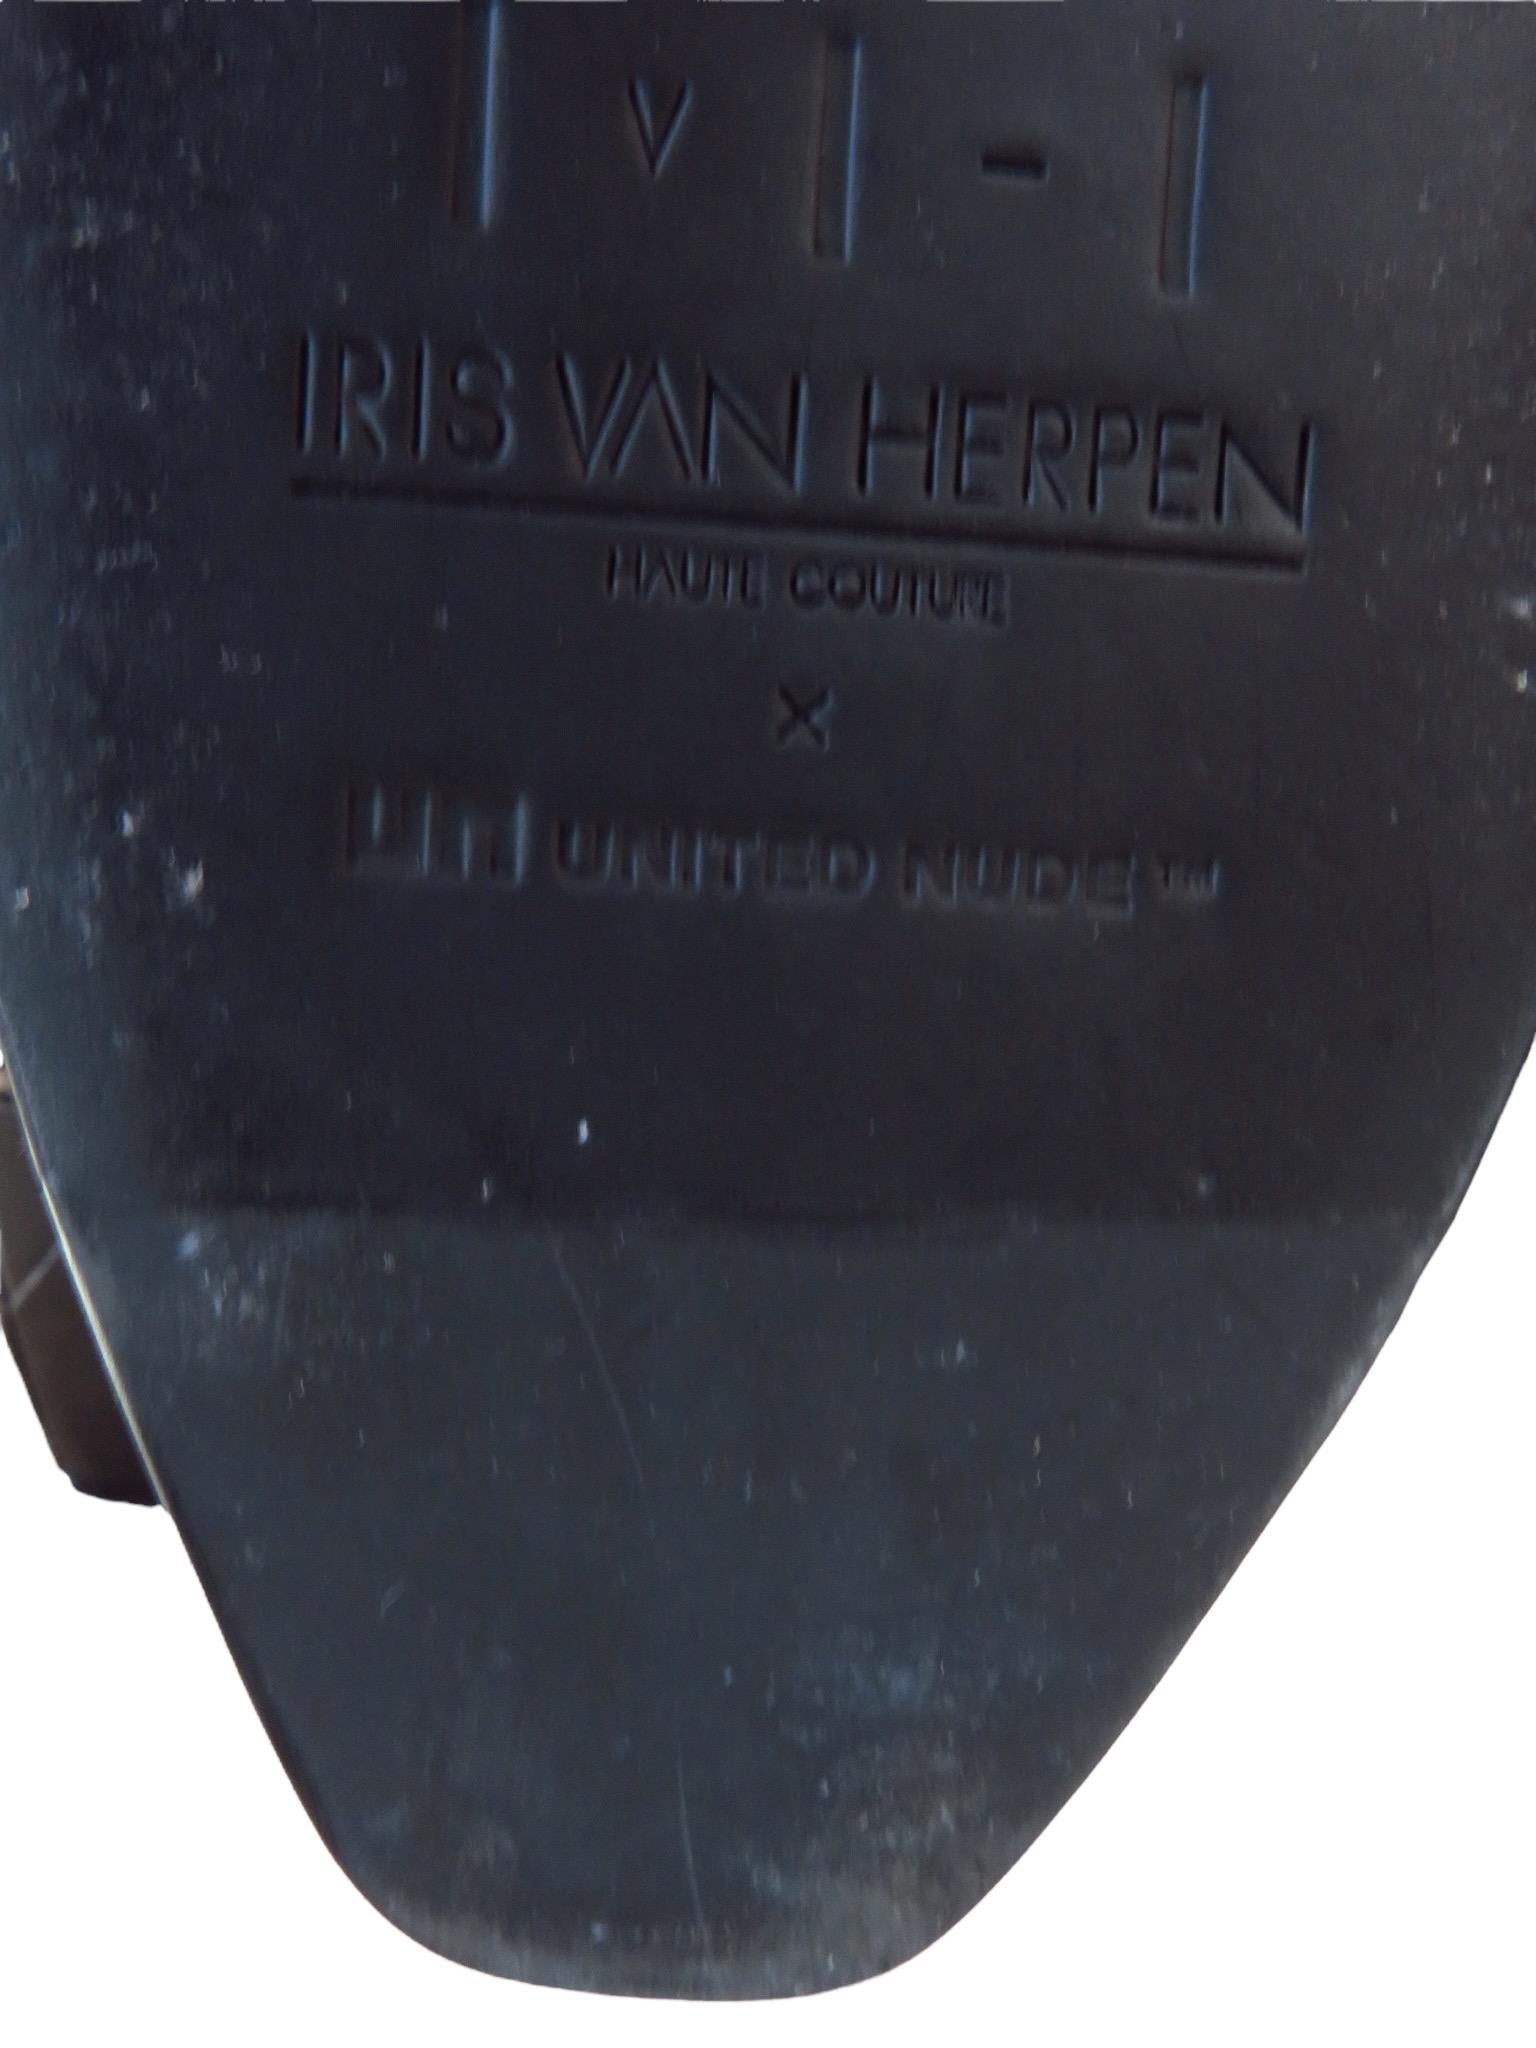 Iris Van Herpen x United Nude Collection Ankle Bootie For Sale 7